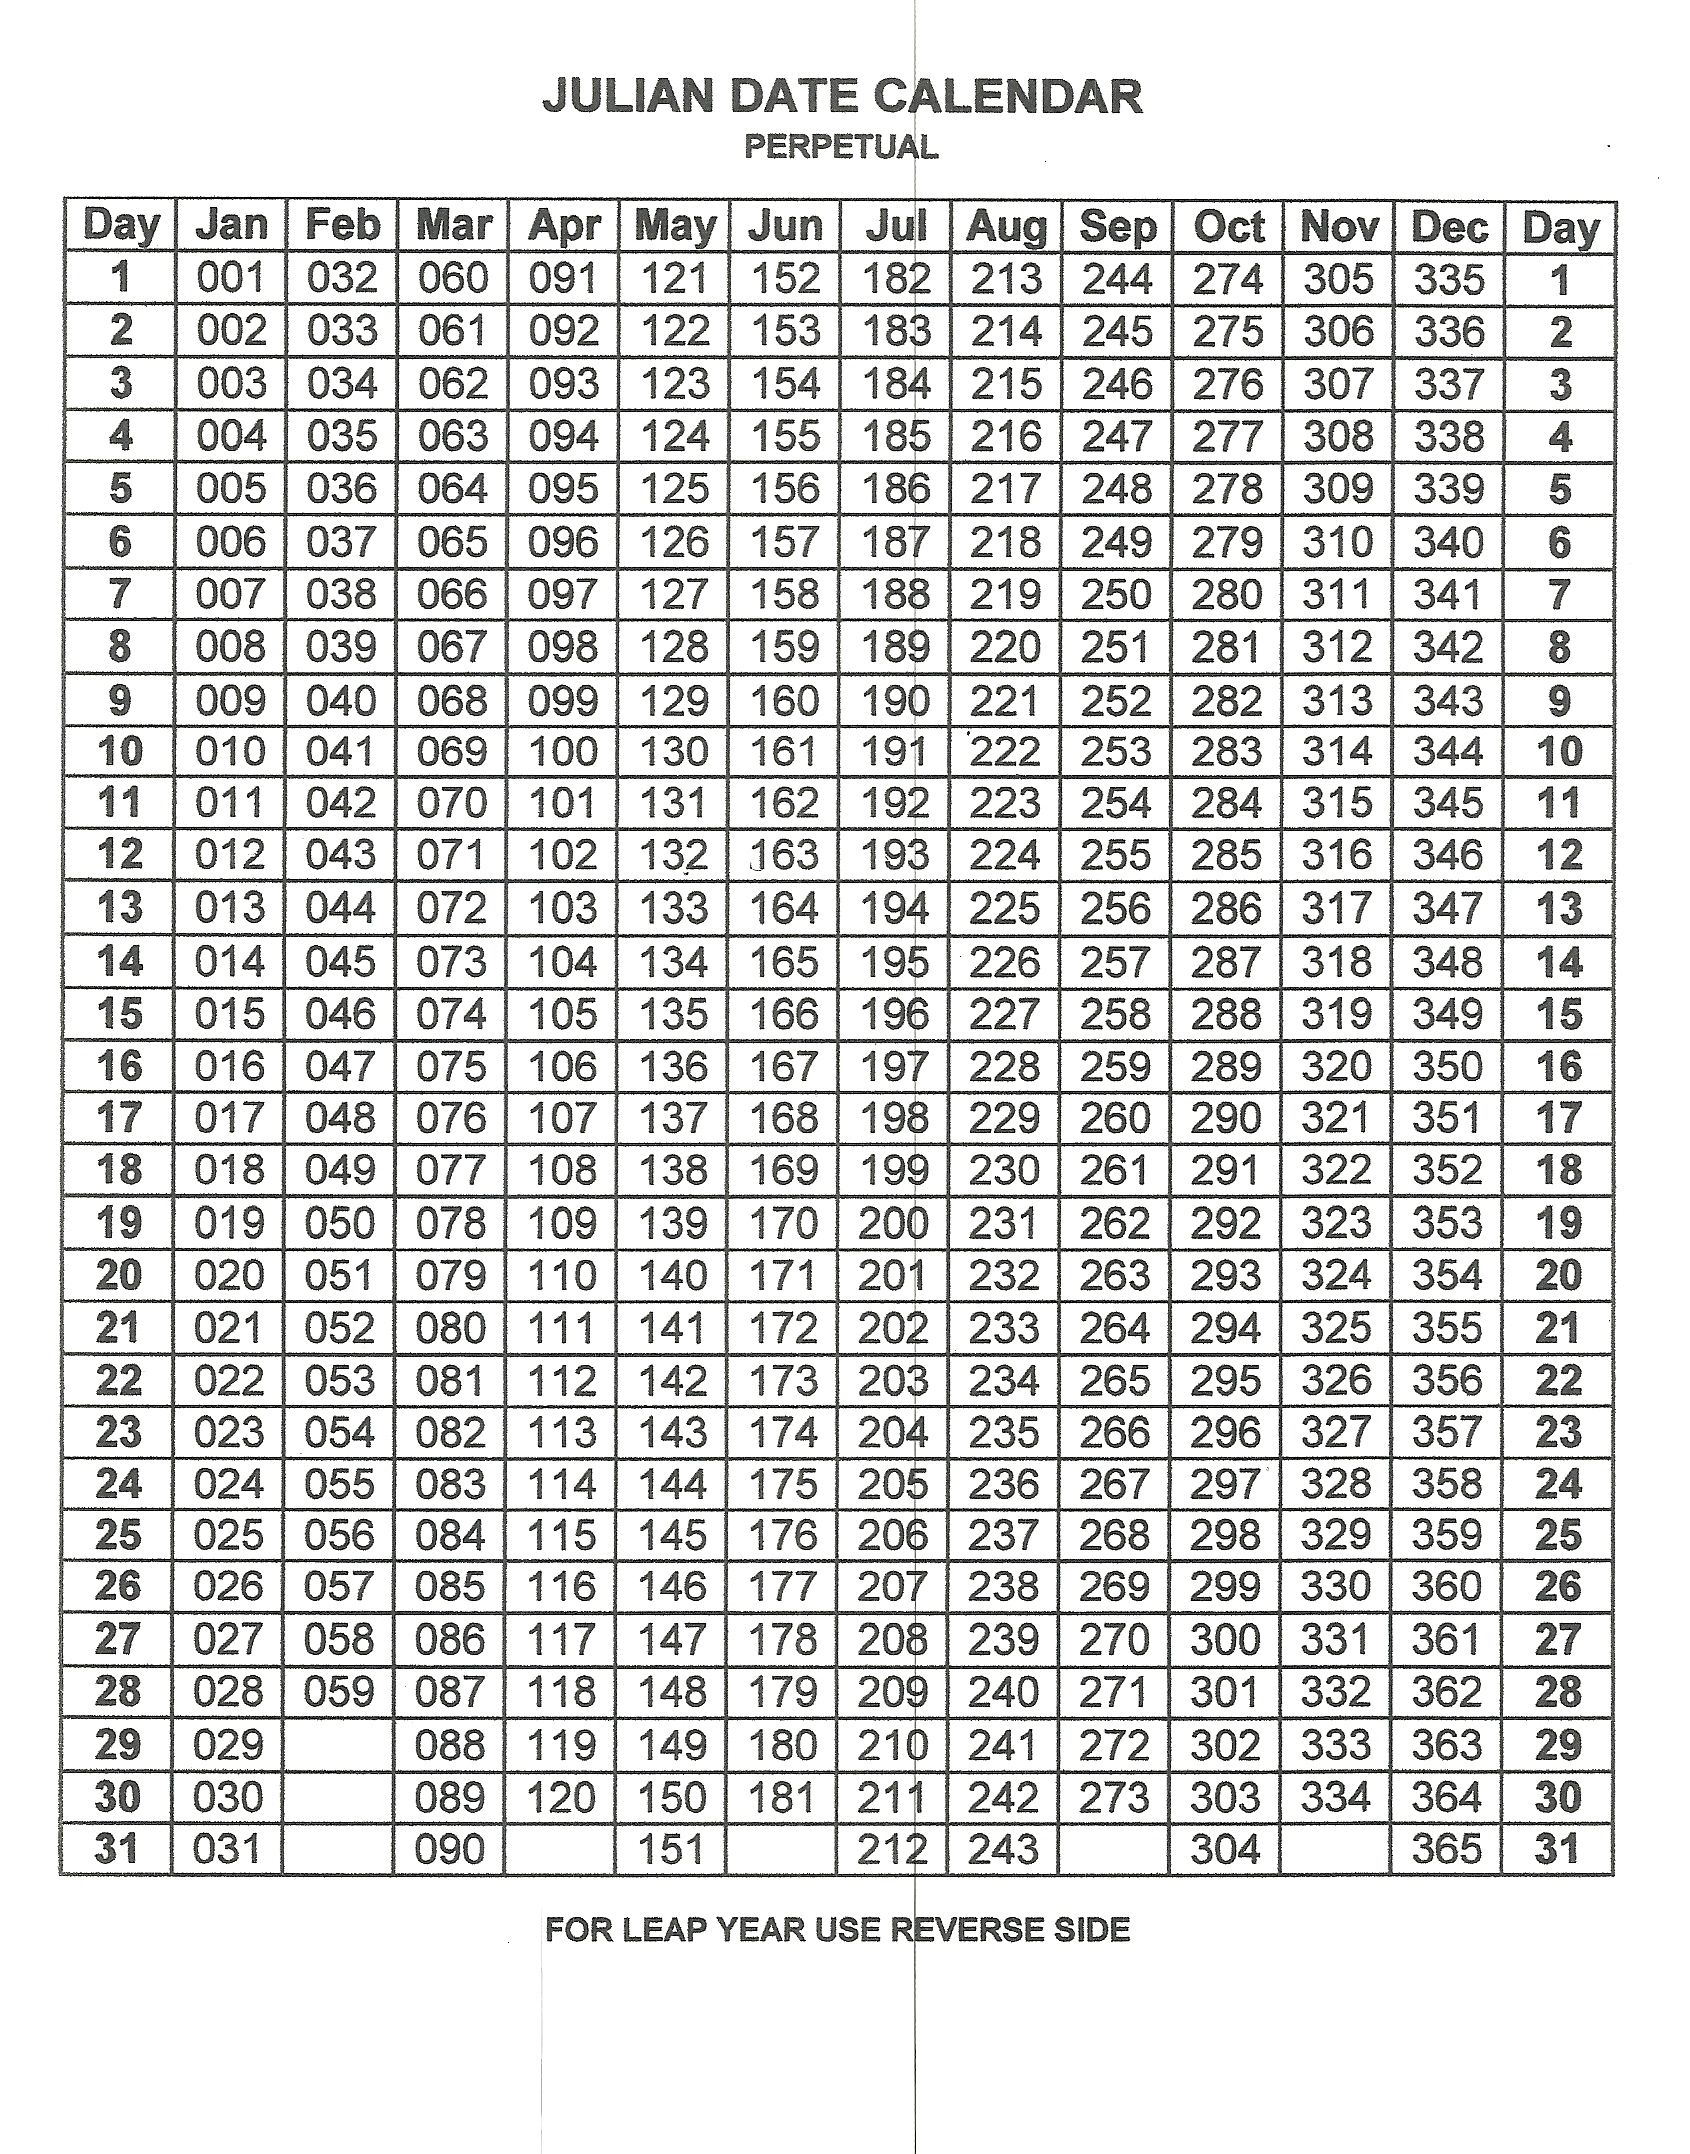 Julian Date Calendar 2020 Printable | Example Calendar for 2018 Julian Calendar Quadax